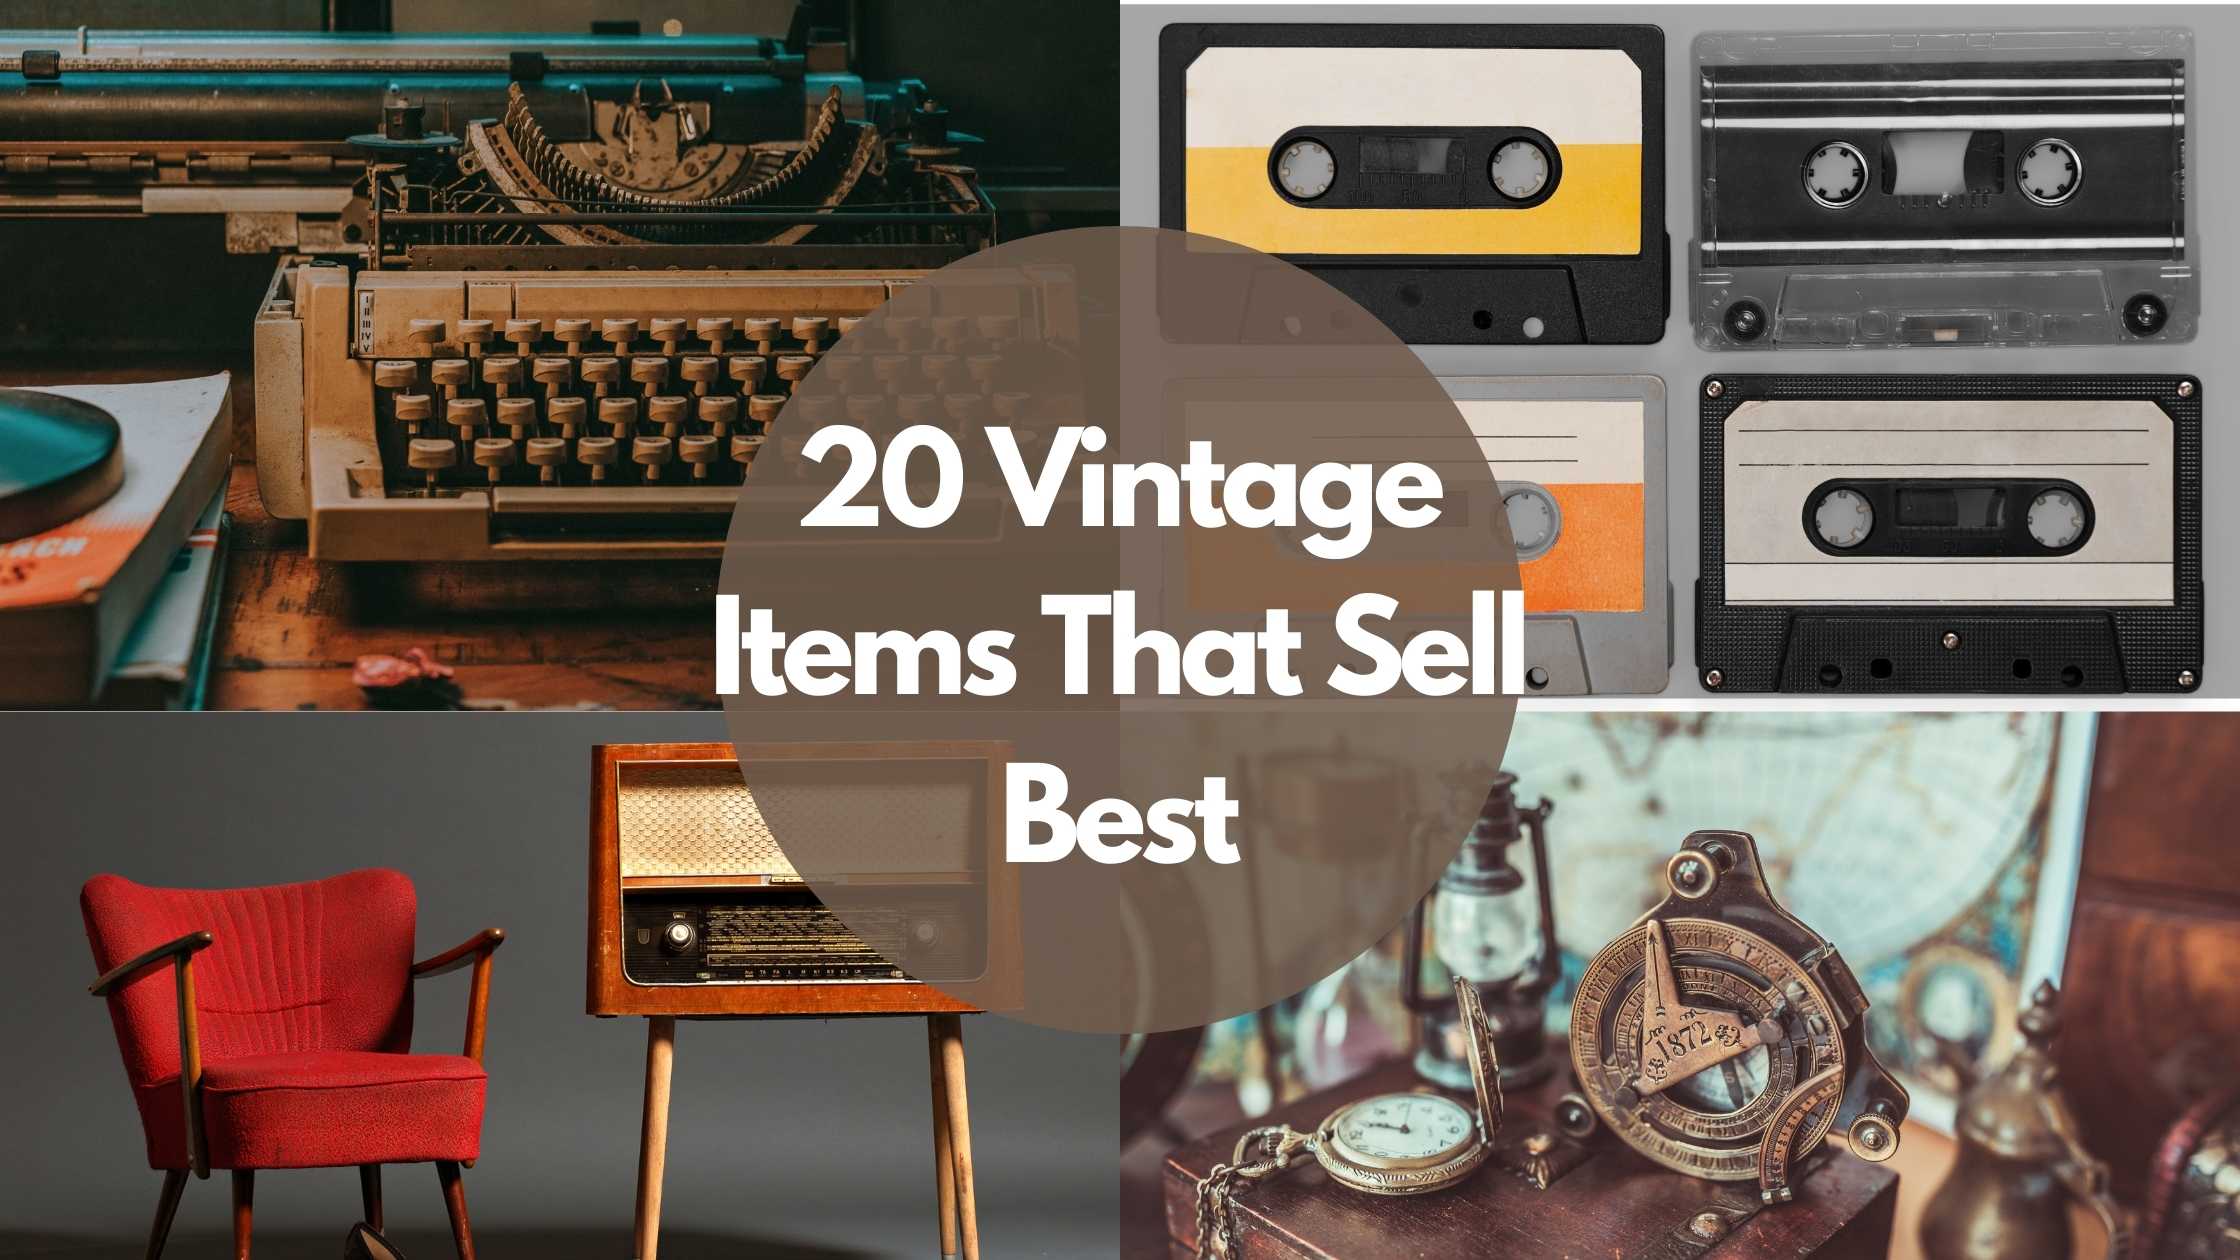 https://www.sheepbuy.com/blog/wp-content/uploads/2020/10/20-Vintage-Items-That-Sell-Best.jpg